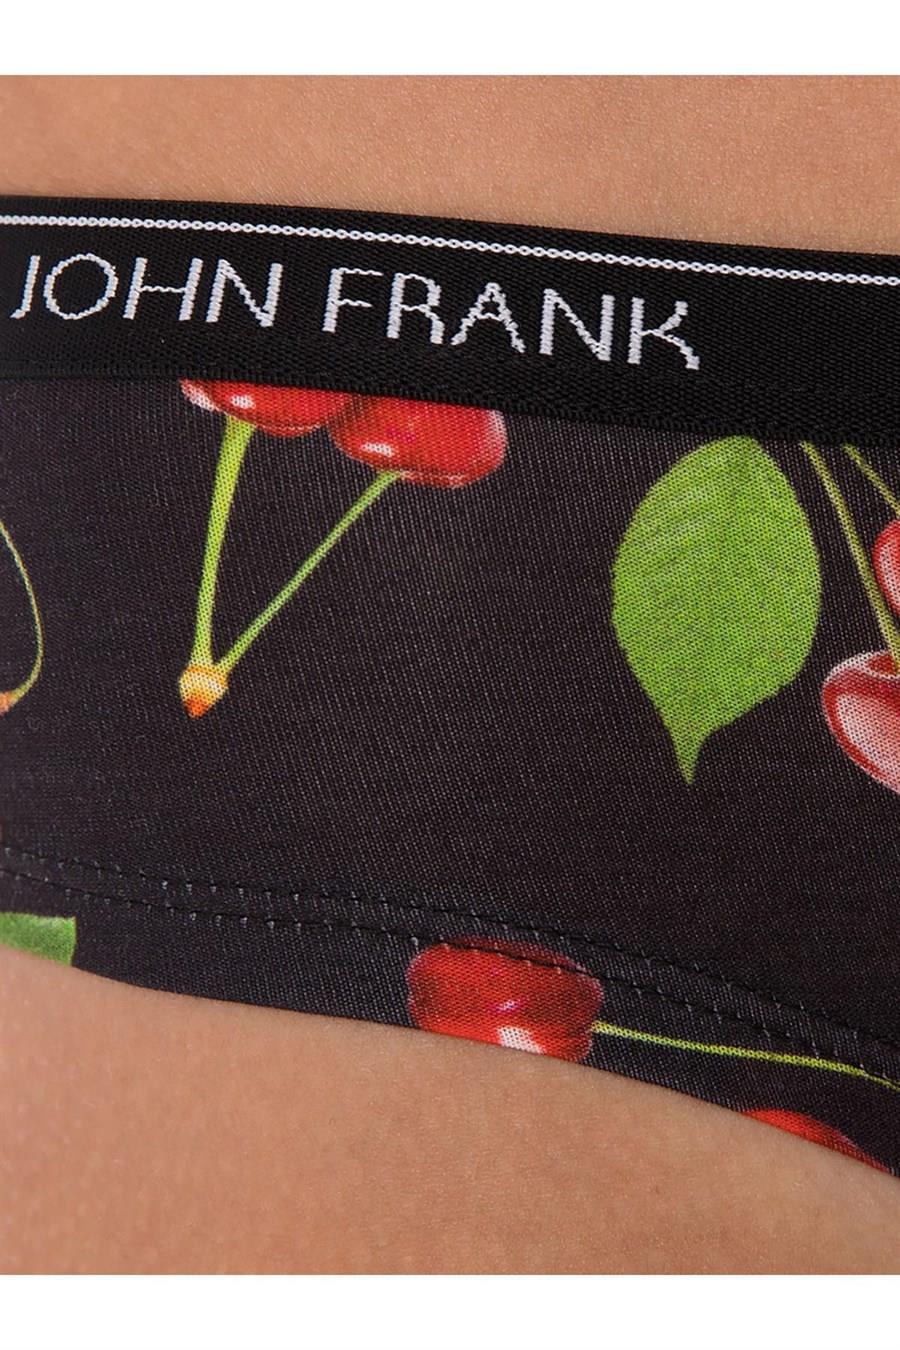 John Frank Identity Womens Hipster-Cherry Lady - STREET MODE ™